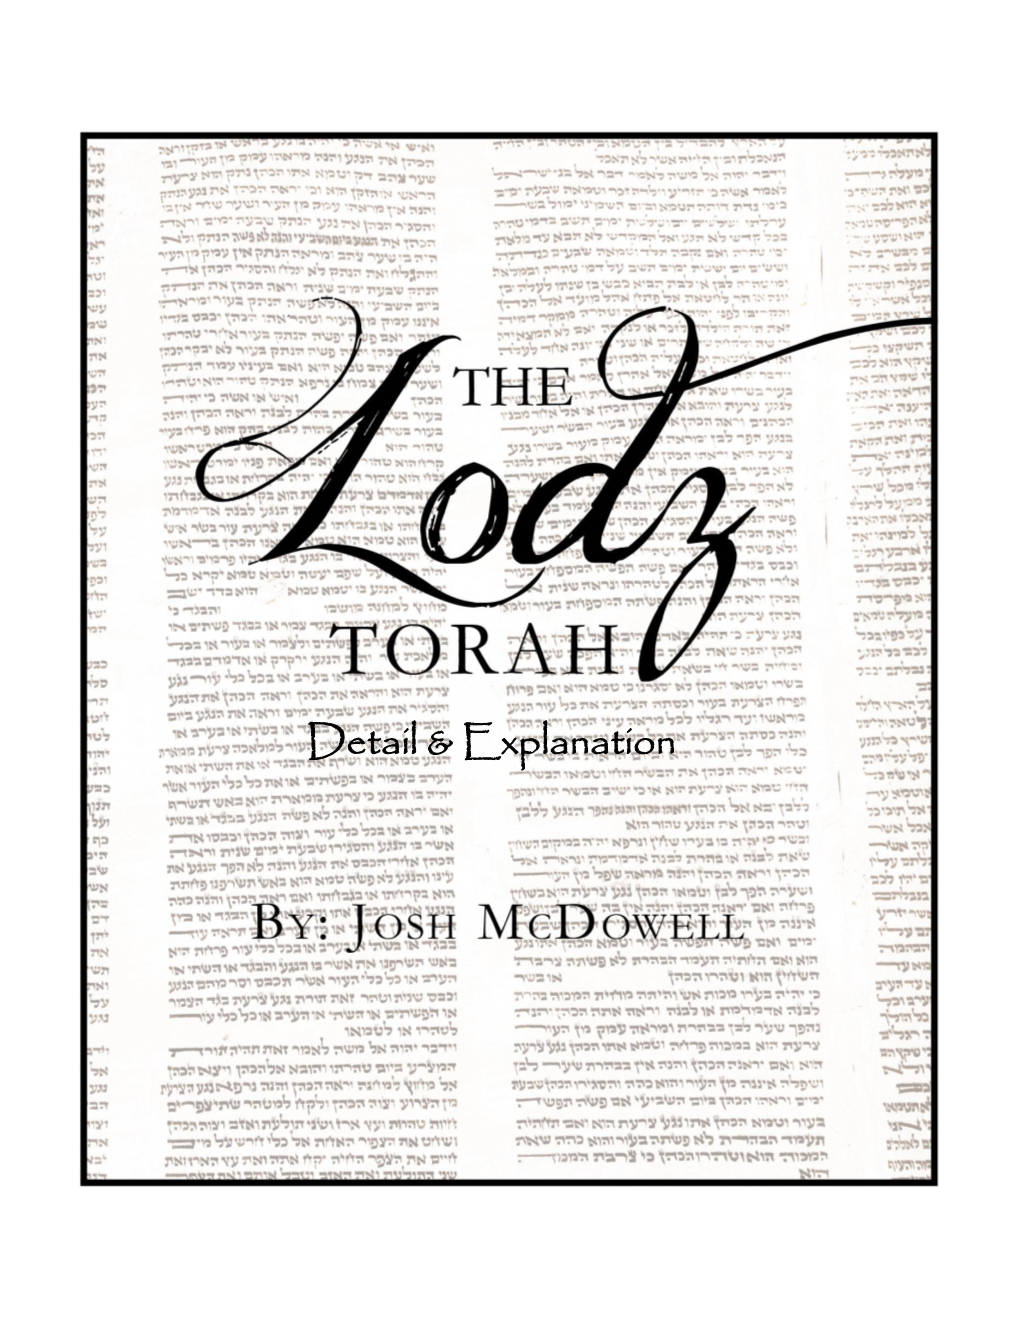 The Lodz Torah – Detail & Explanation – 04.28.14 2